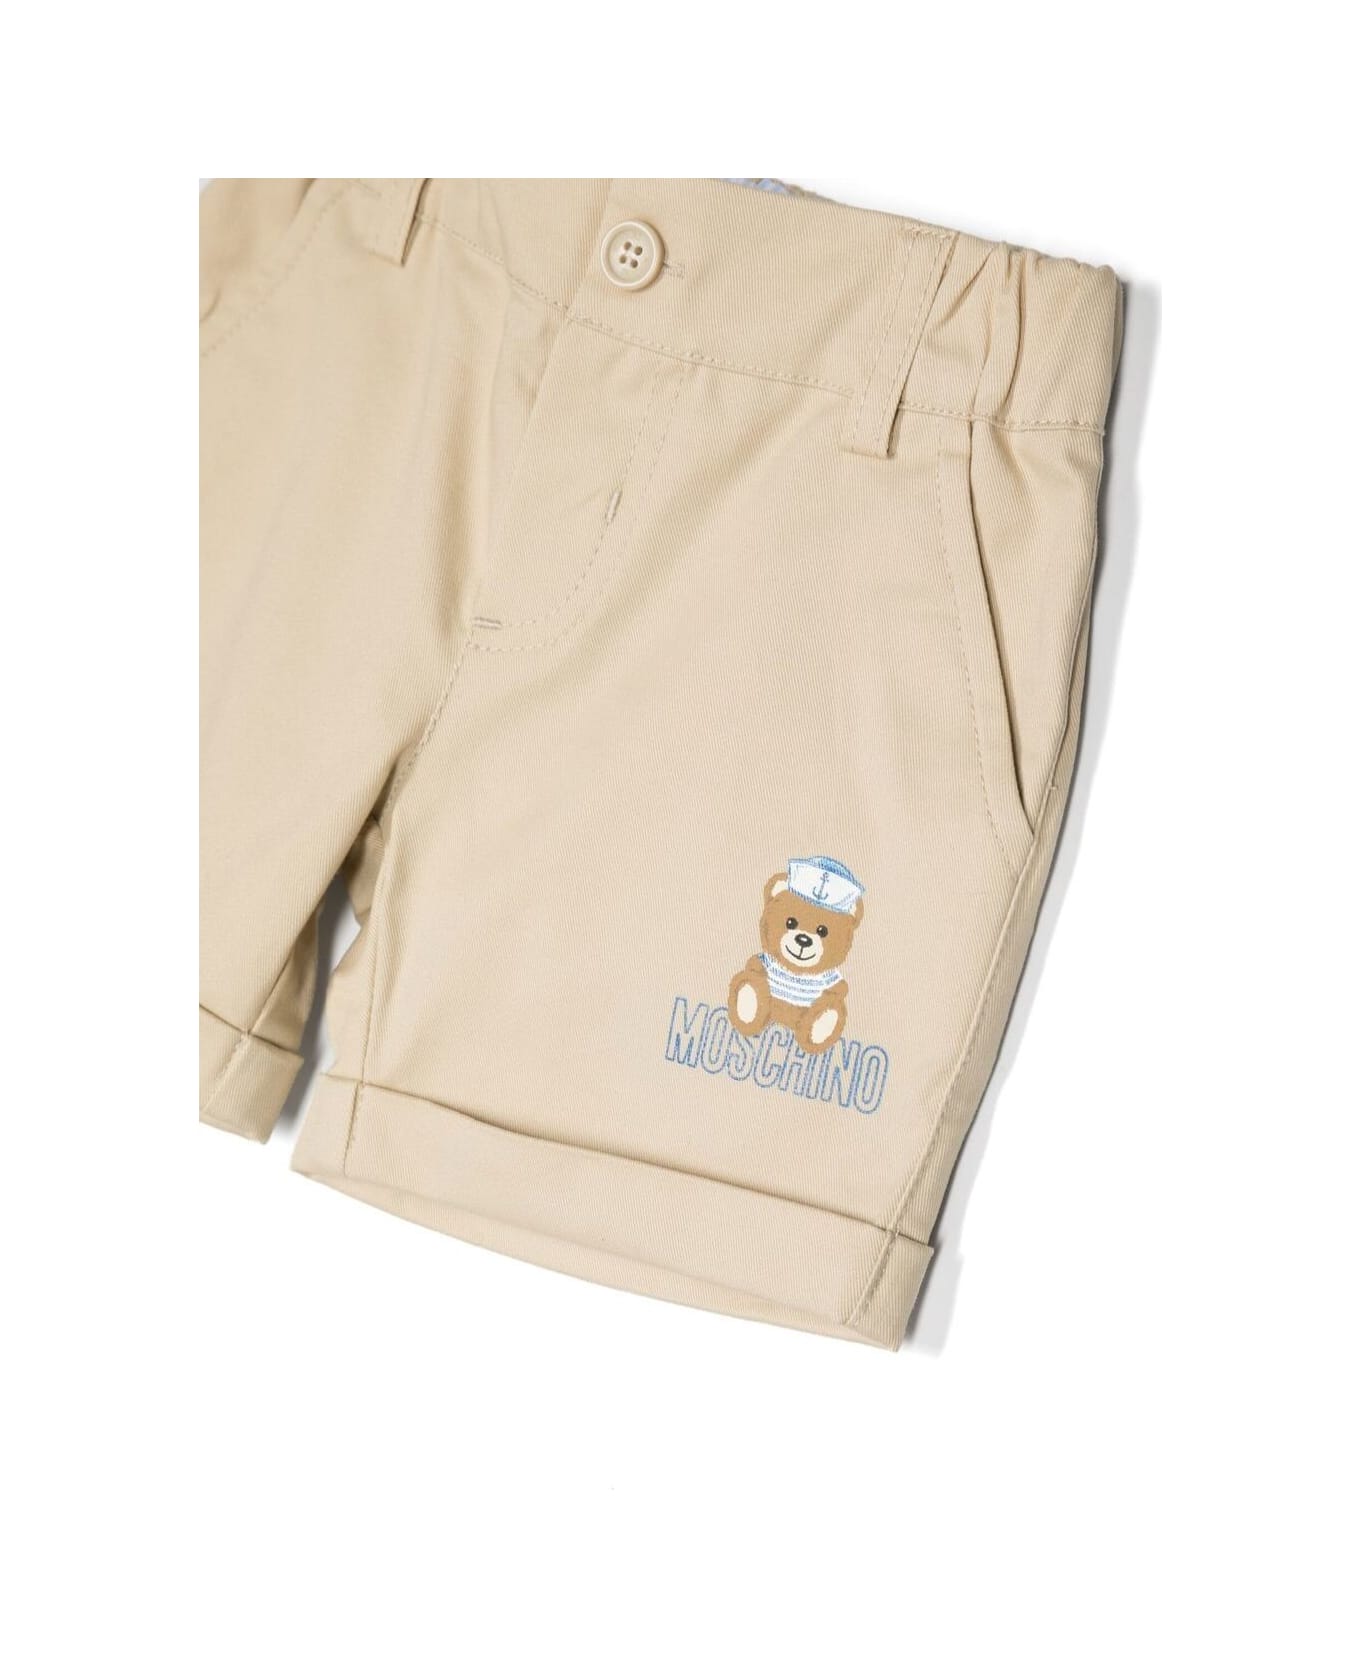 Moschino Polo Shirt And Shorts Set - Blu